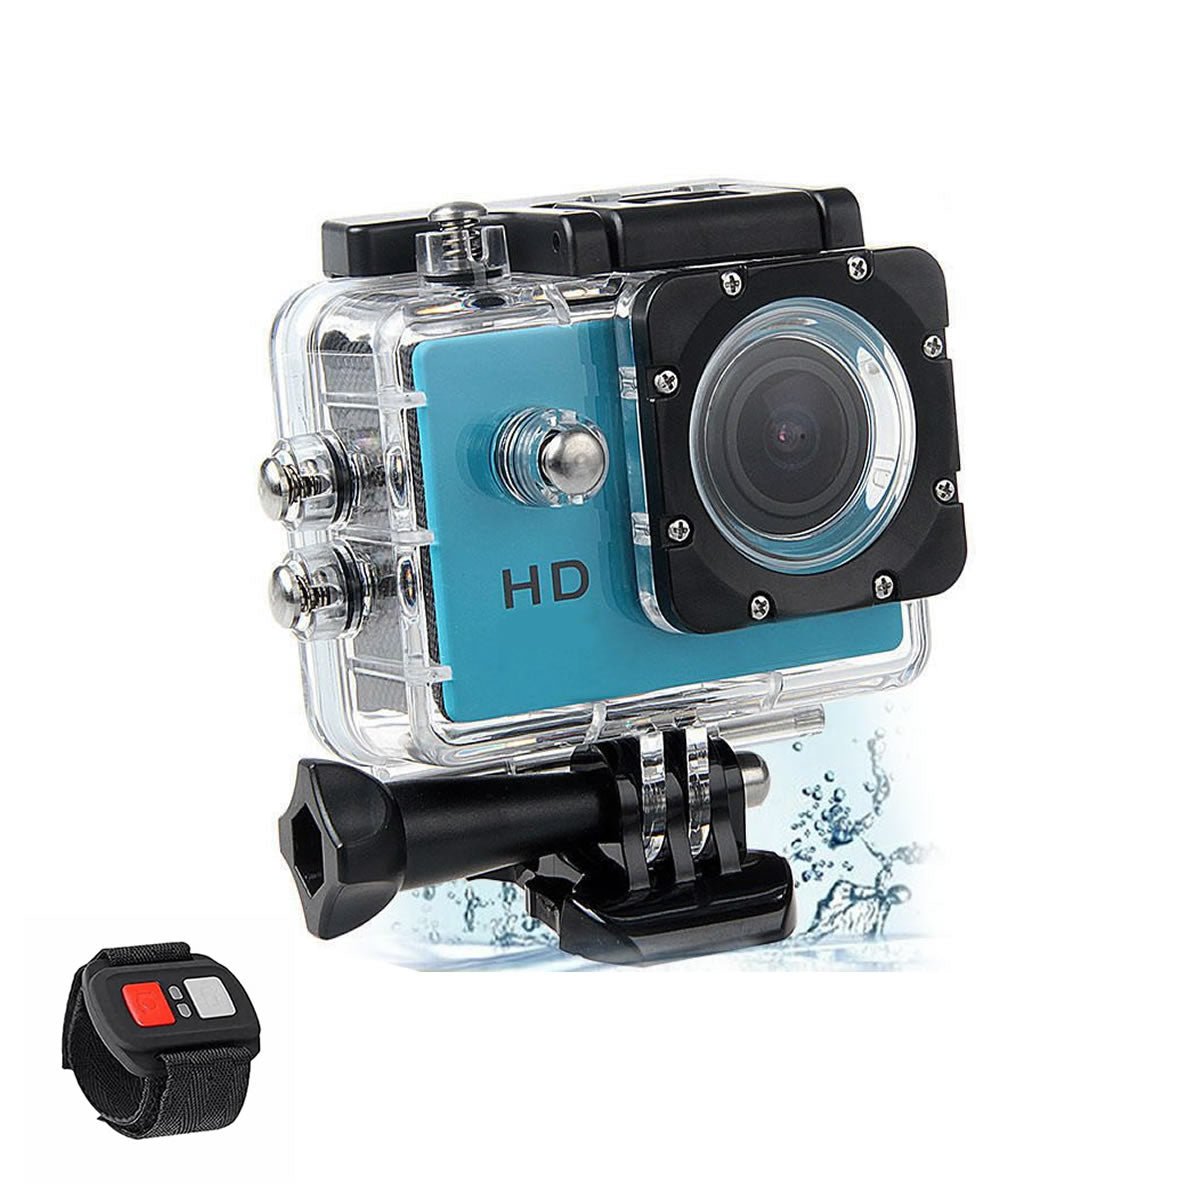 4K Waterproof All Digital UHD WiFi Camera + RF Remote And Accessories - Saltwater Bodega